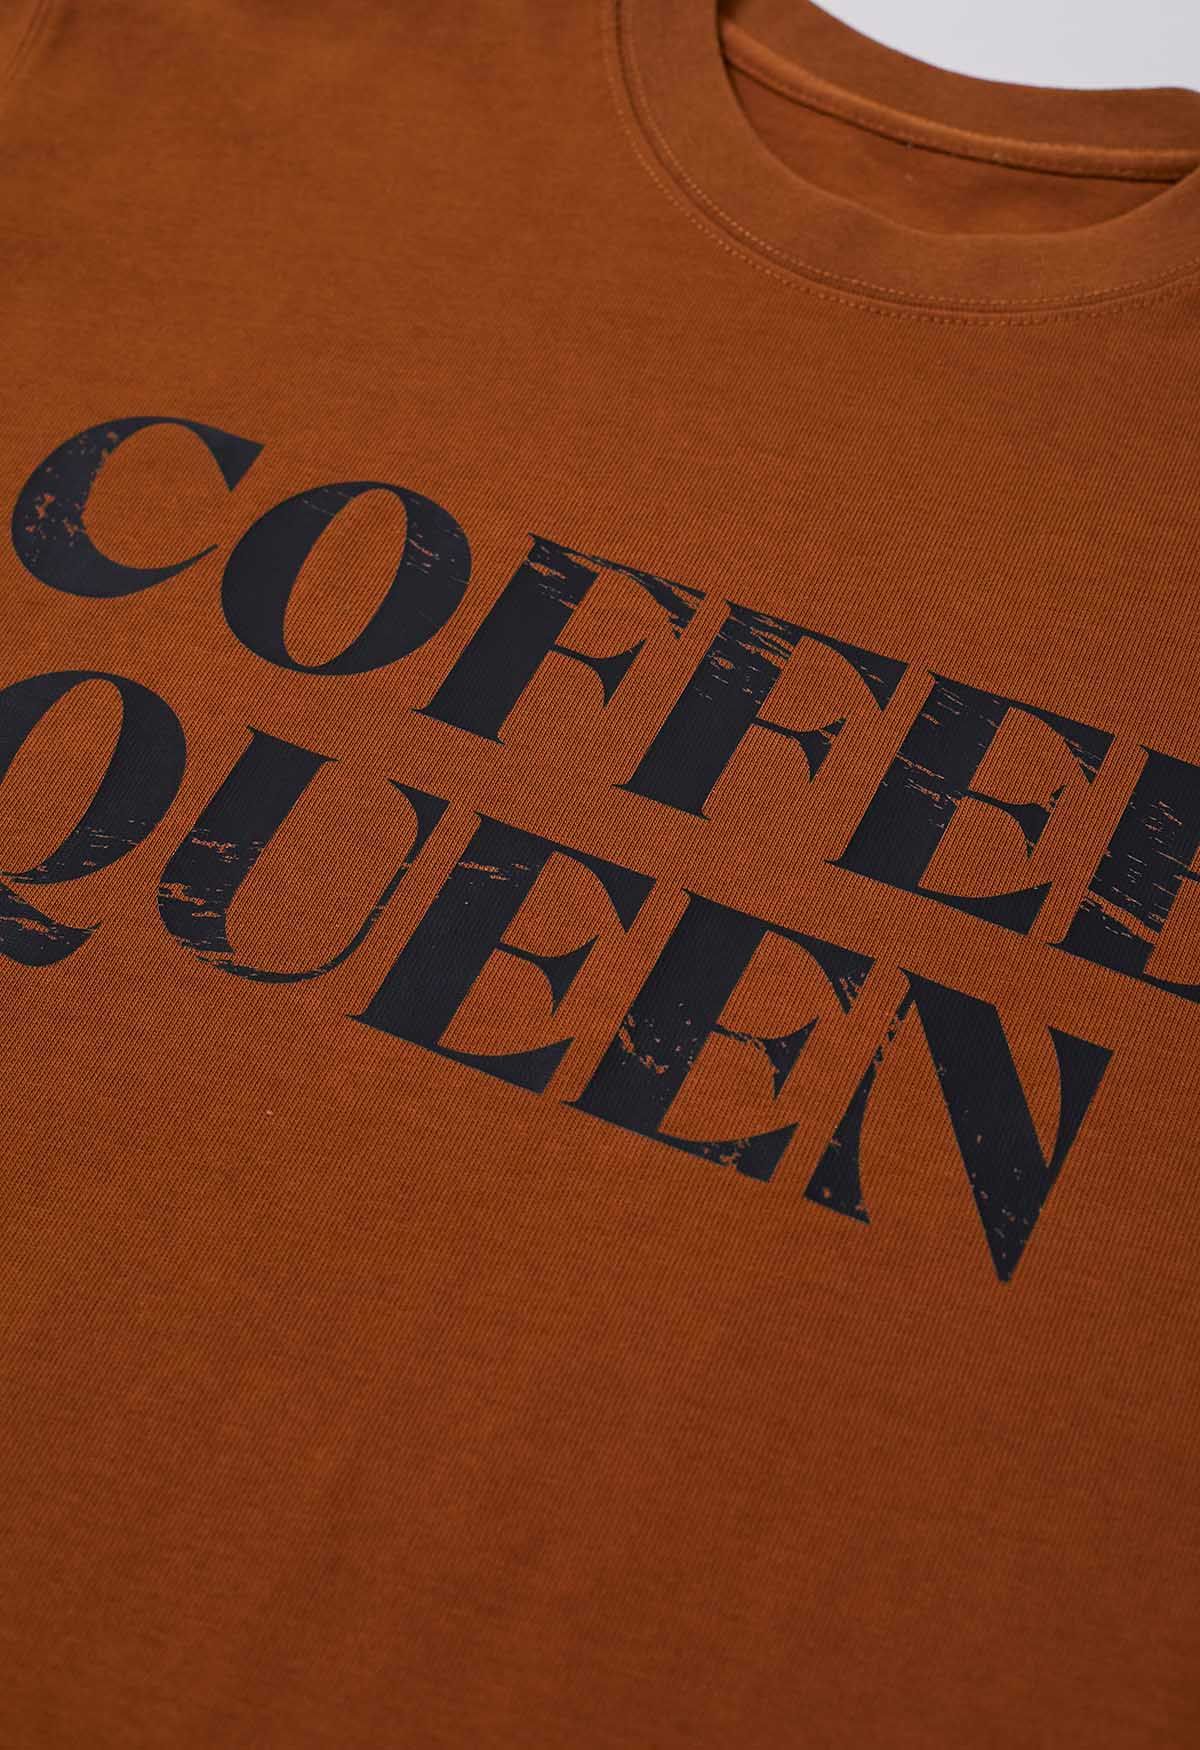 T-shirt en coton imprimé Coffee Queen en caramel